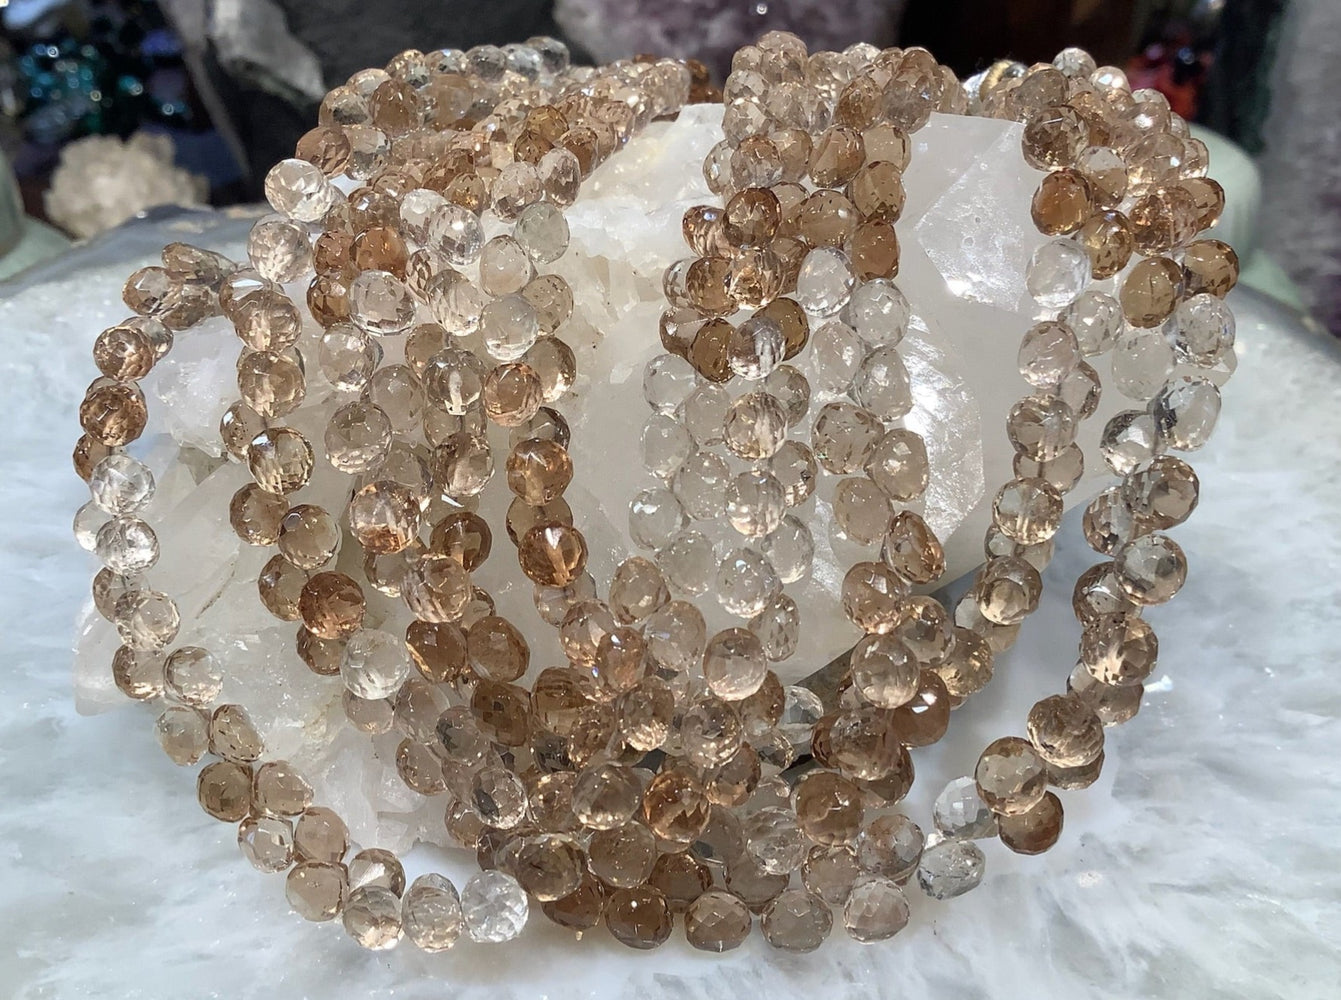 Stunning Sparkling Imperial Topaz Faceted Briolette Pendant Gemstone Beads